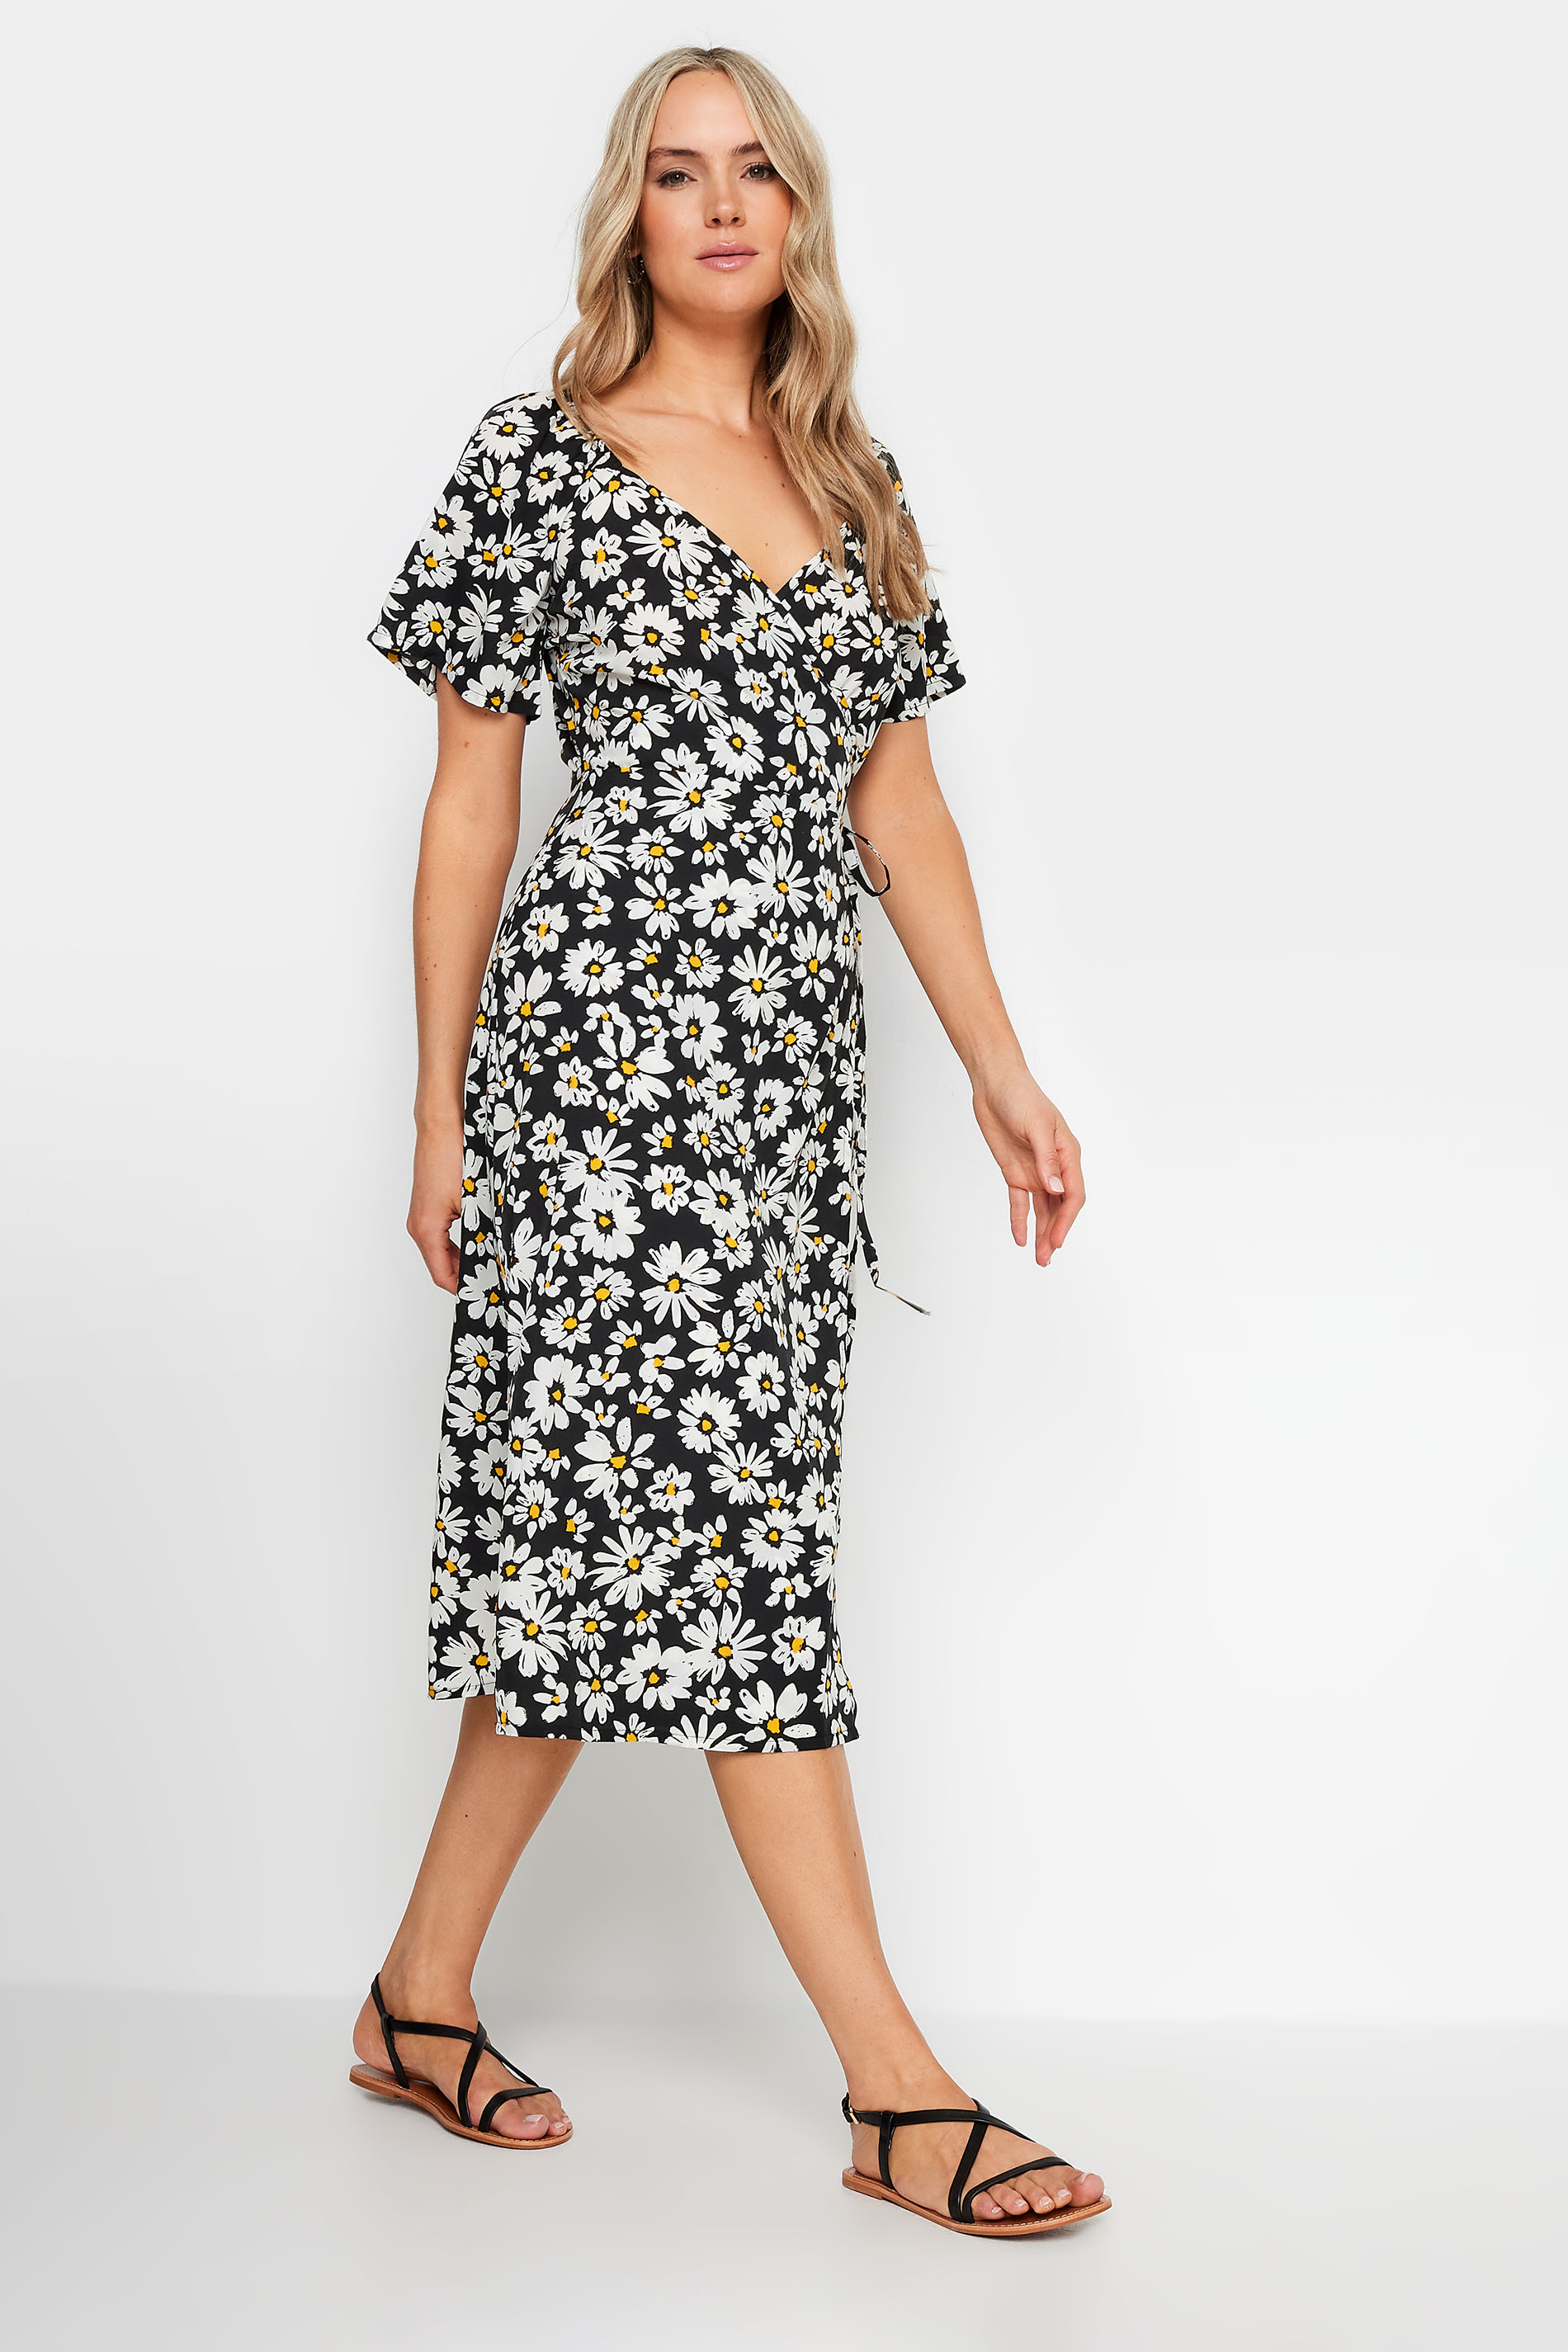 LTS Tall Women's Black Daisy Print Wrap Dress | Long Tall Sally 1